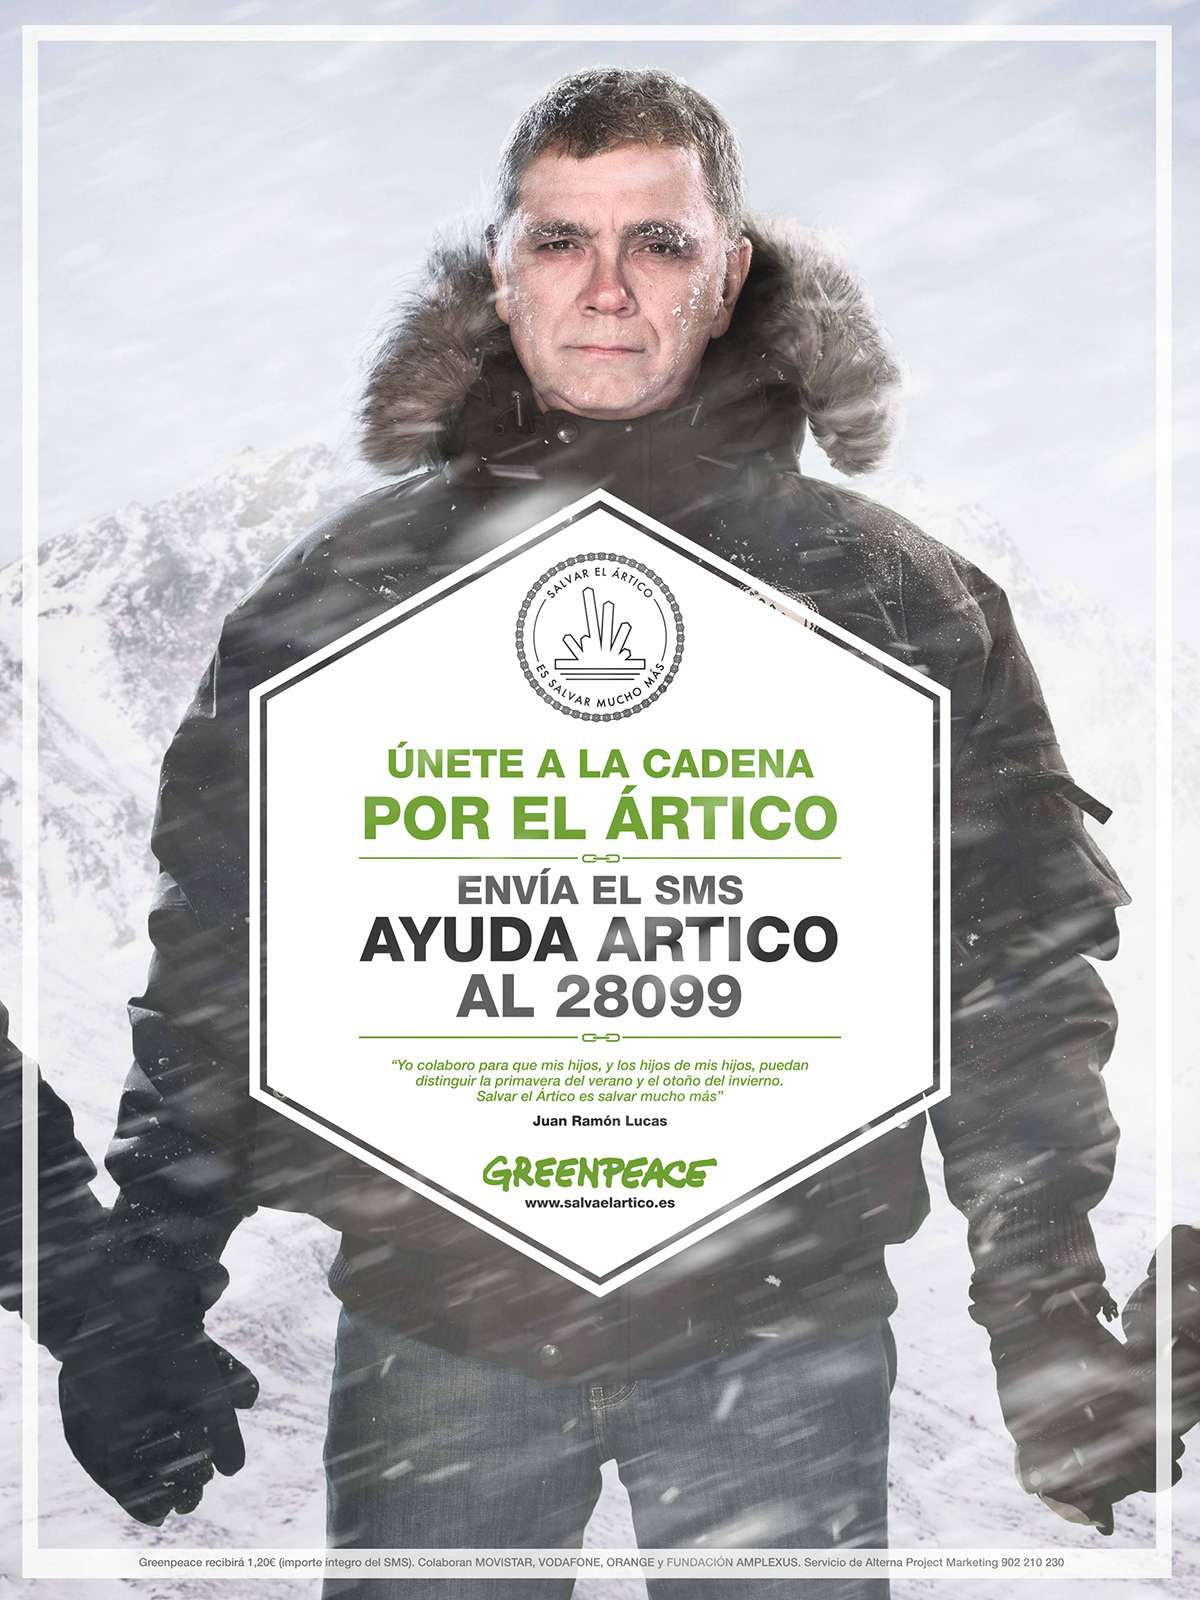 Greenpeace  arctic  npo  nature ad causes